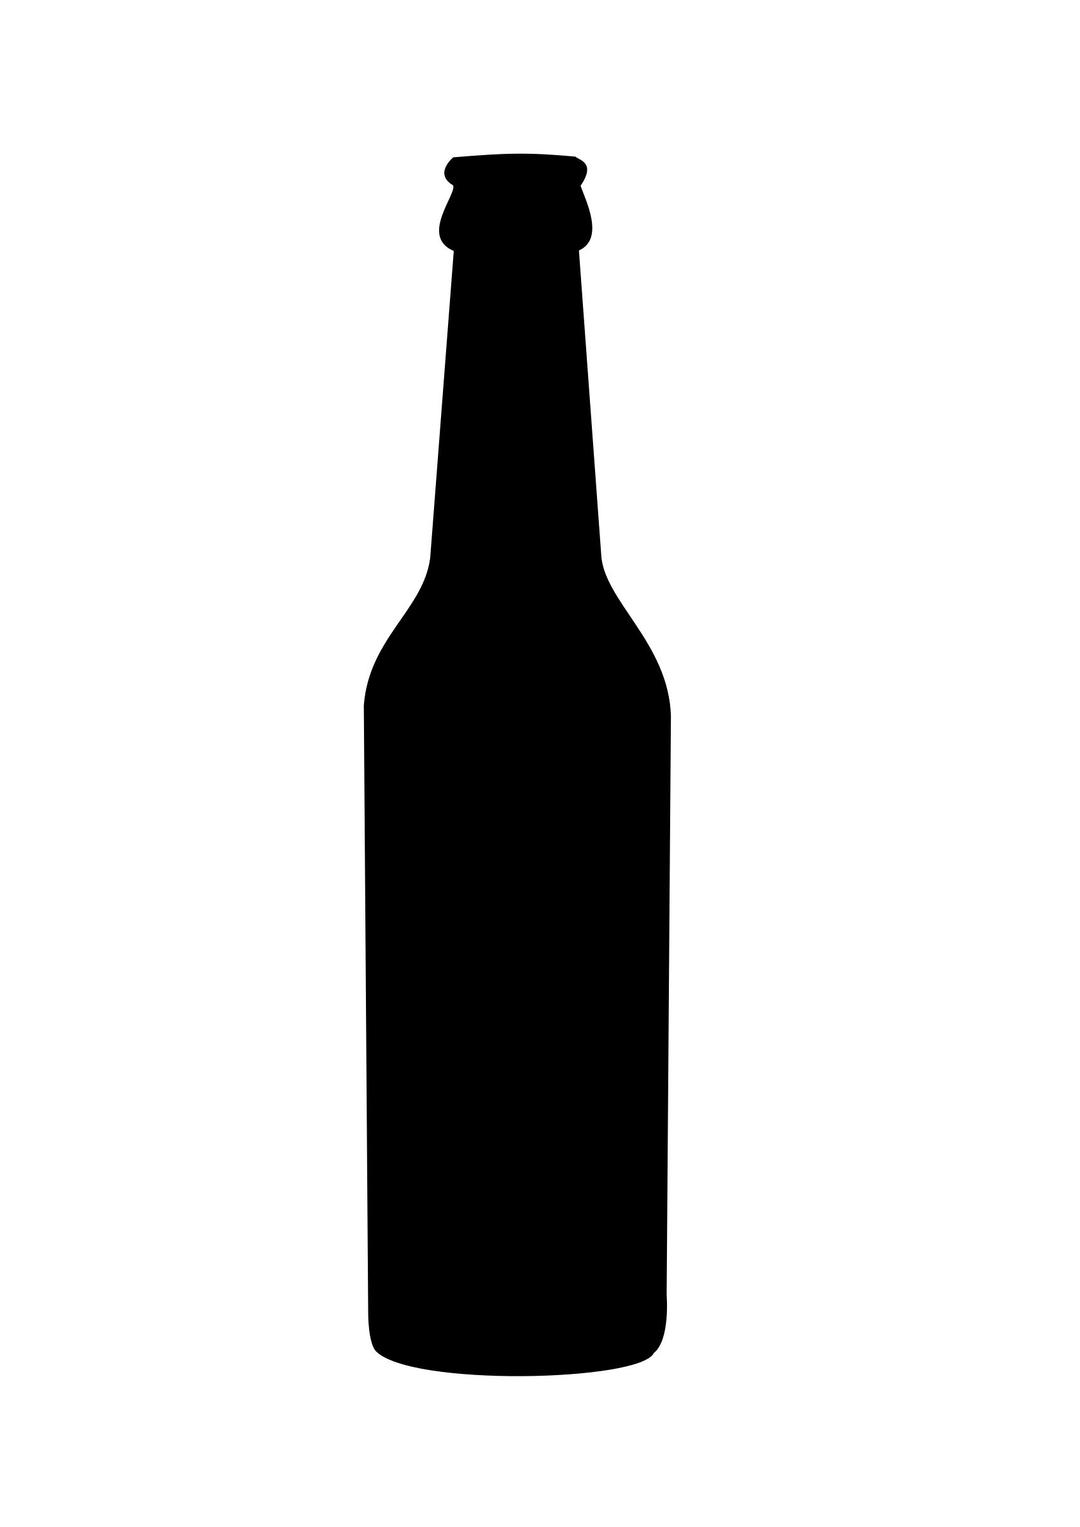 long neck bottle (silhouette) png transparent